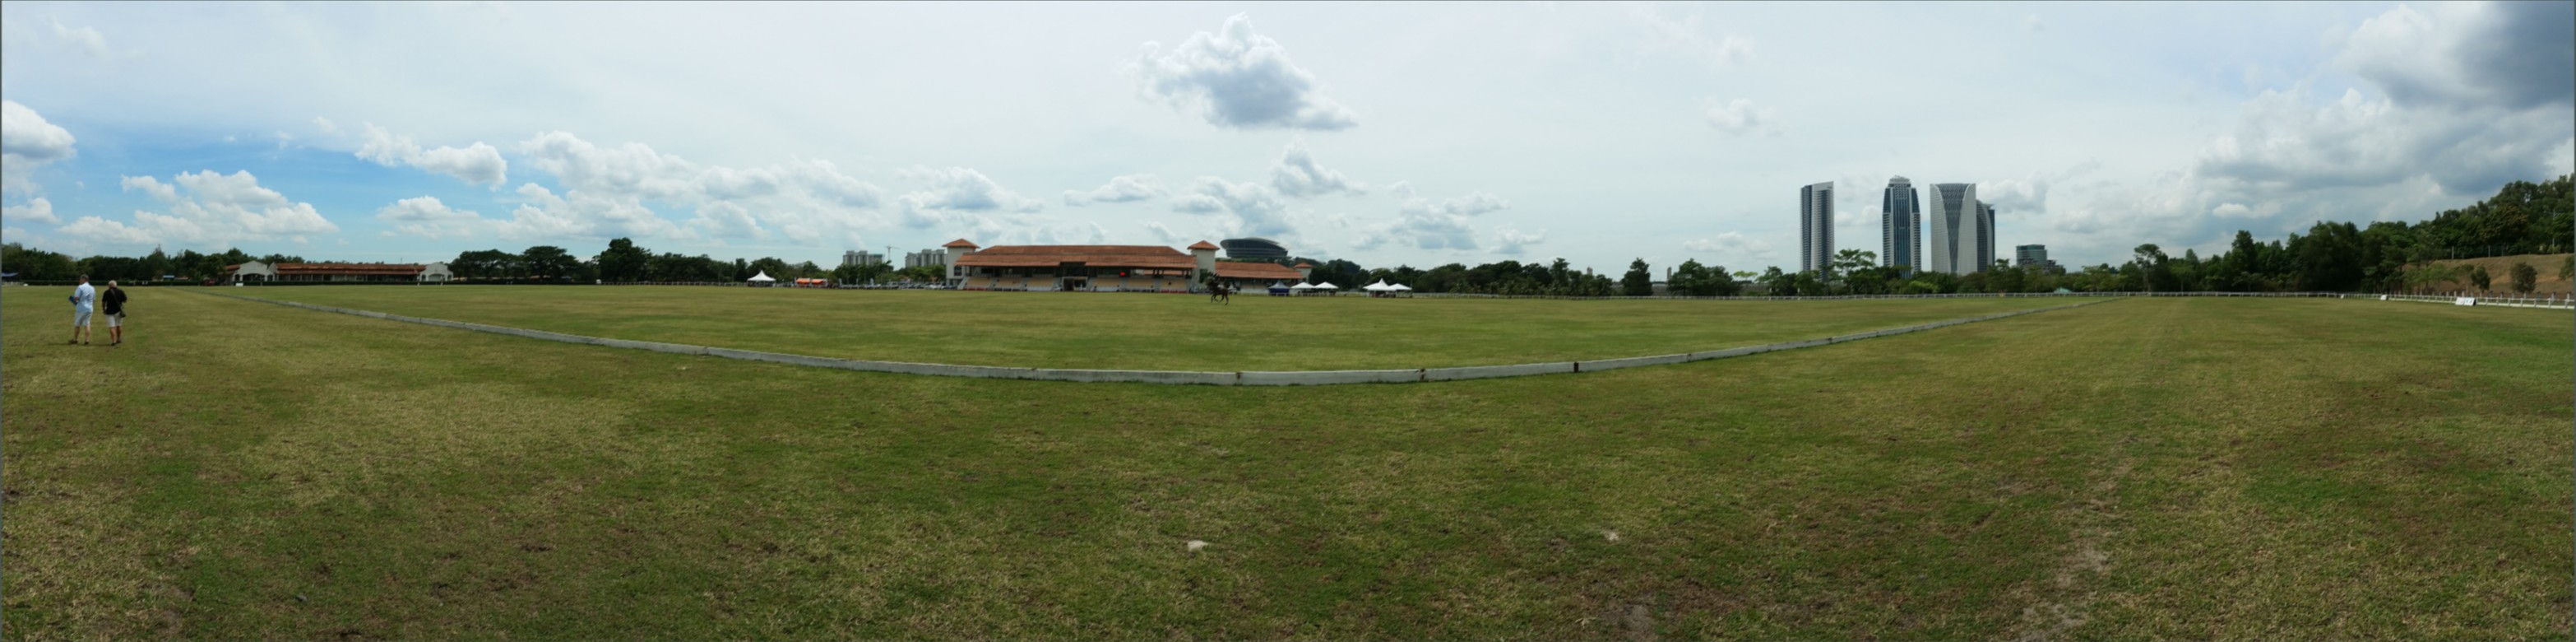 Panoramic view of the "Main Field" at Putrajaya Equestrian Park, Malaysia